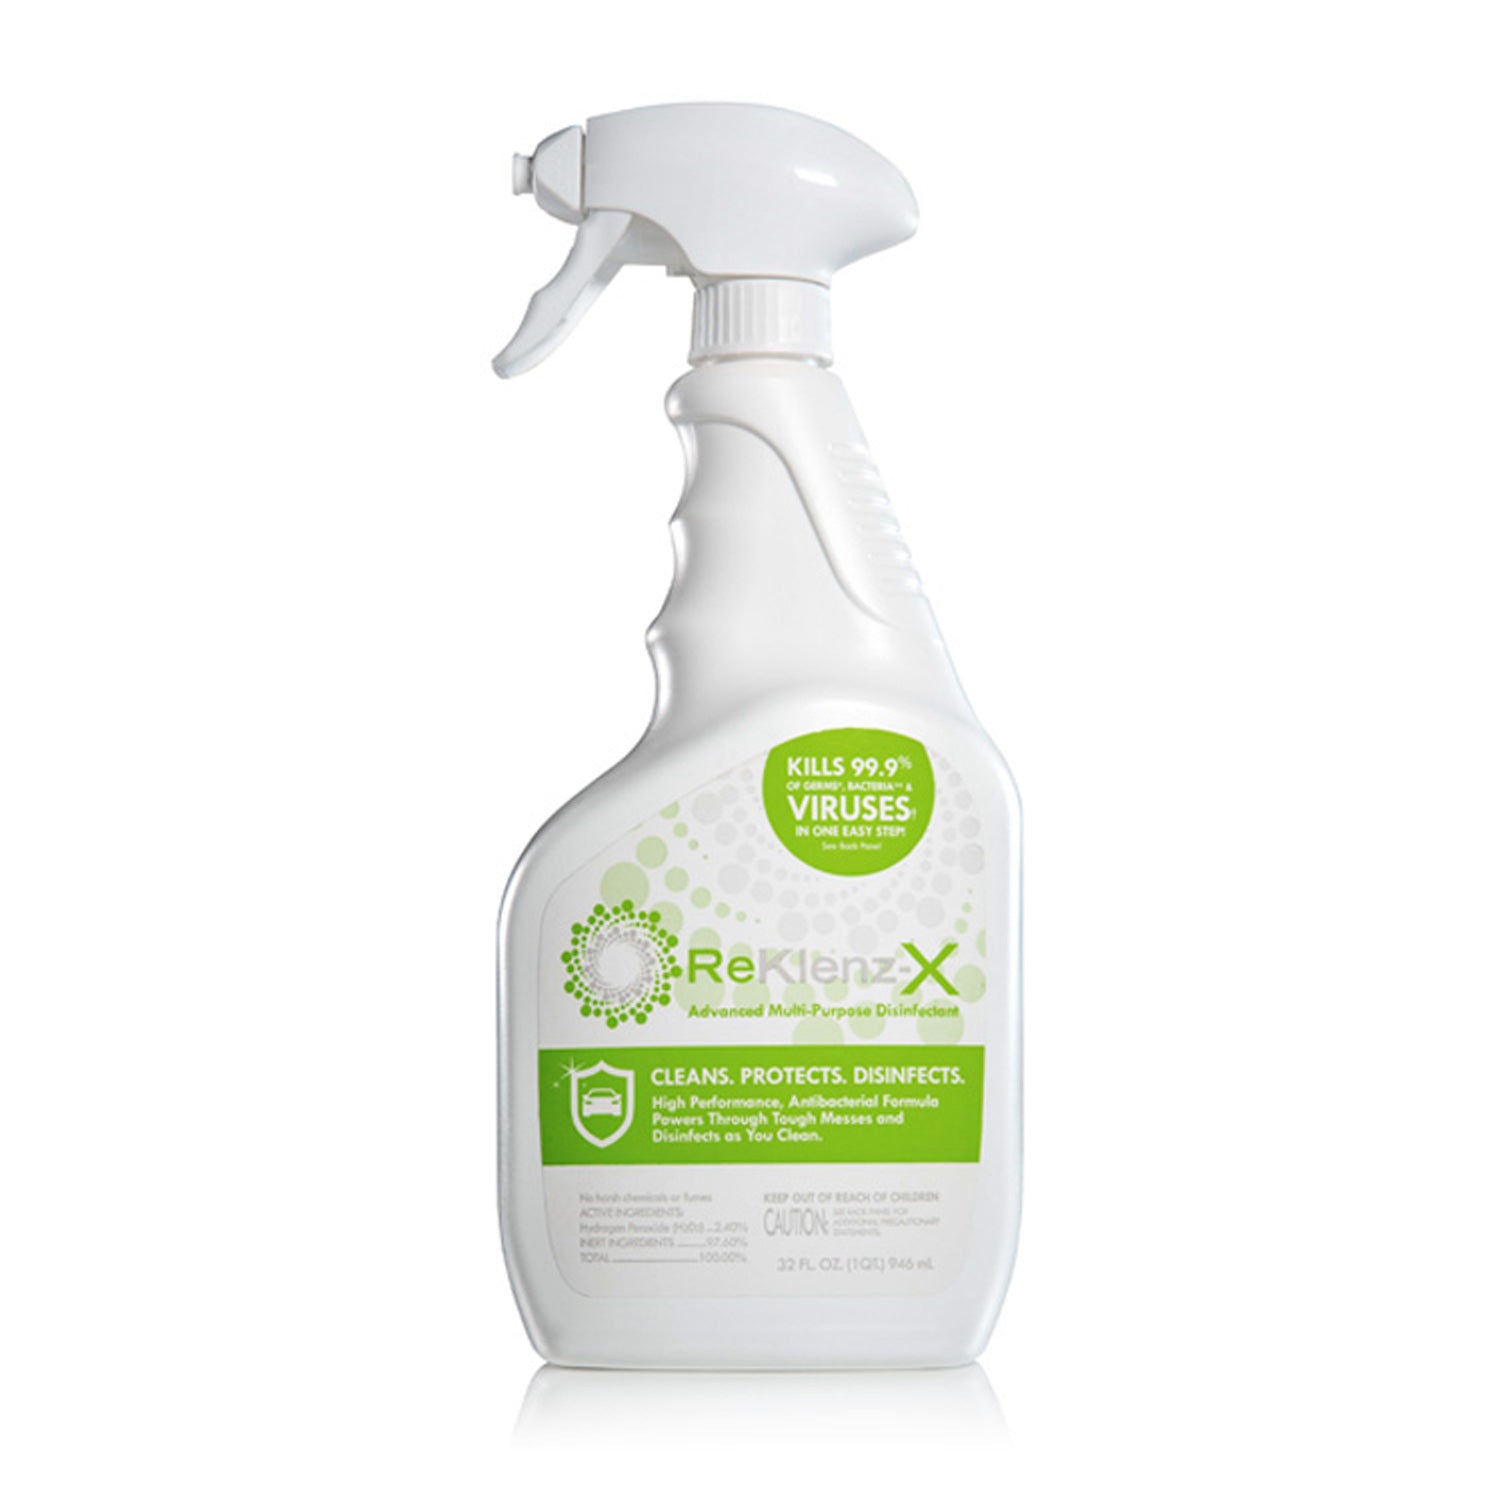 nuvinair-reklenz-surface-disinfectant-spray-bottle